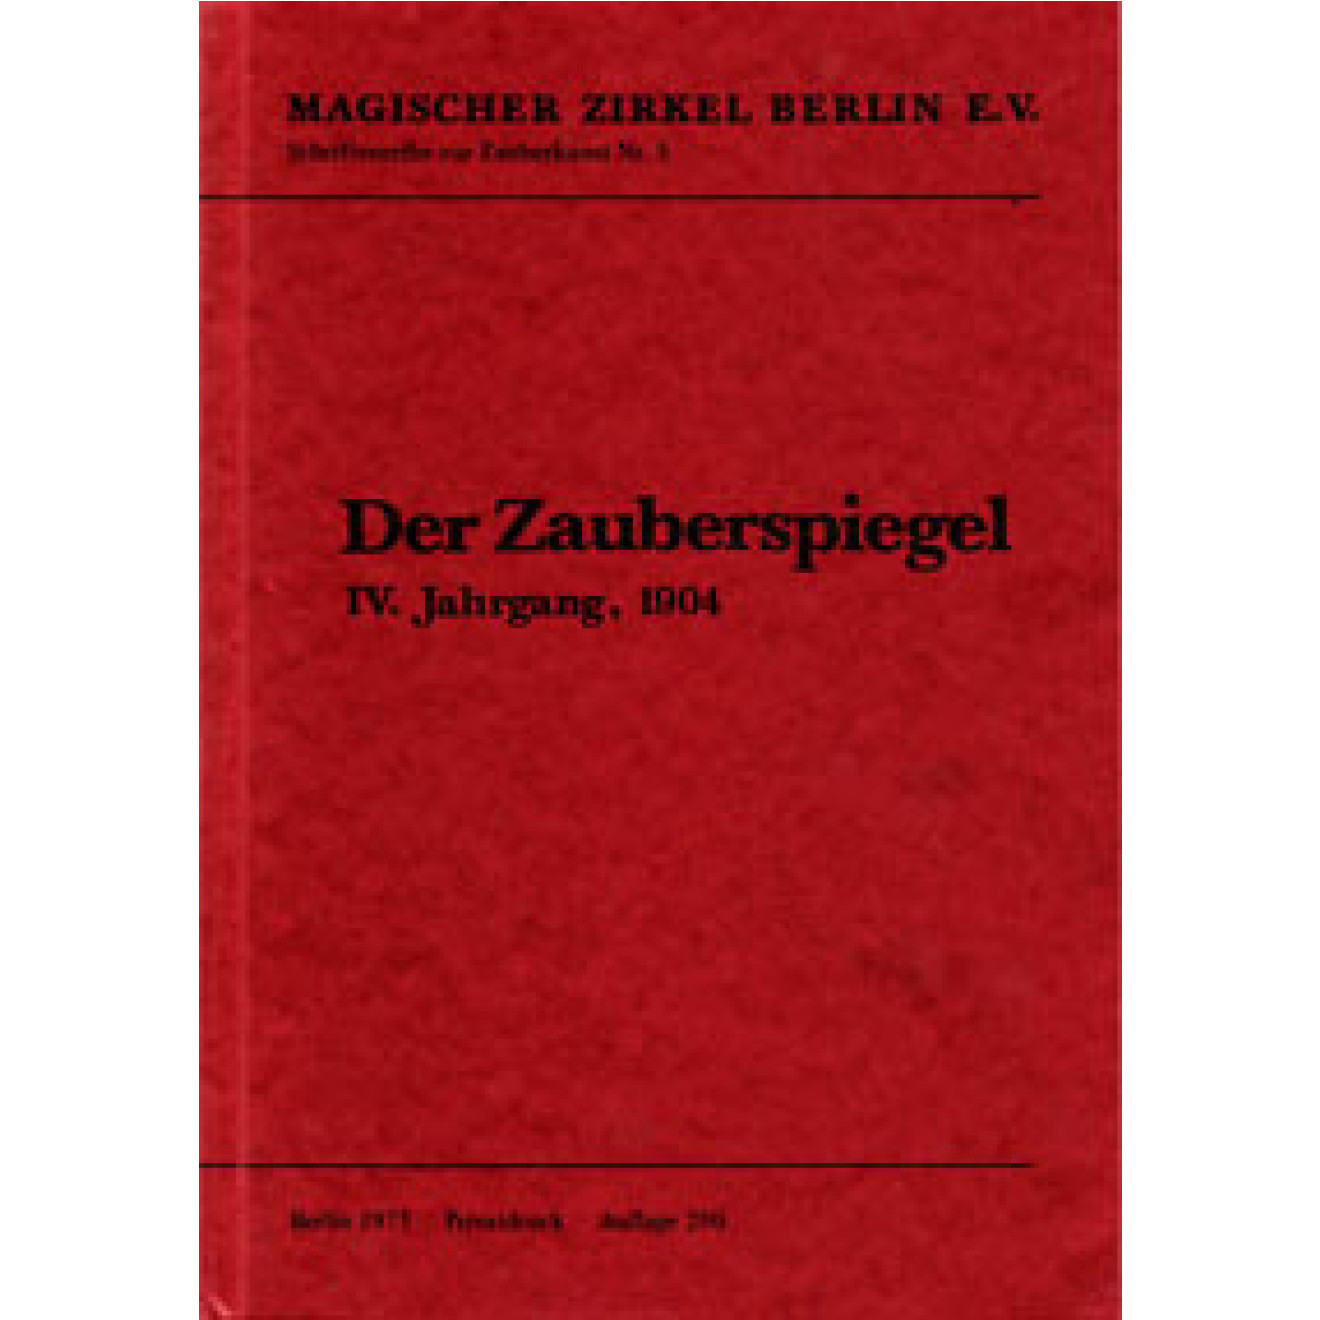 Der Zauberspiegel, 4. Jahrgang, 1904 (MZ Berlin-Reprint)